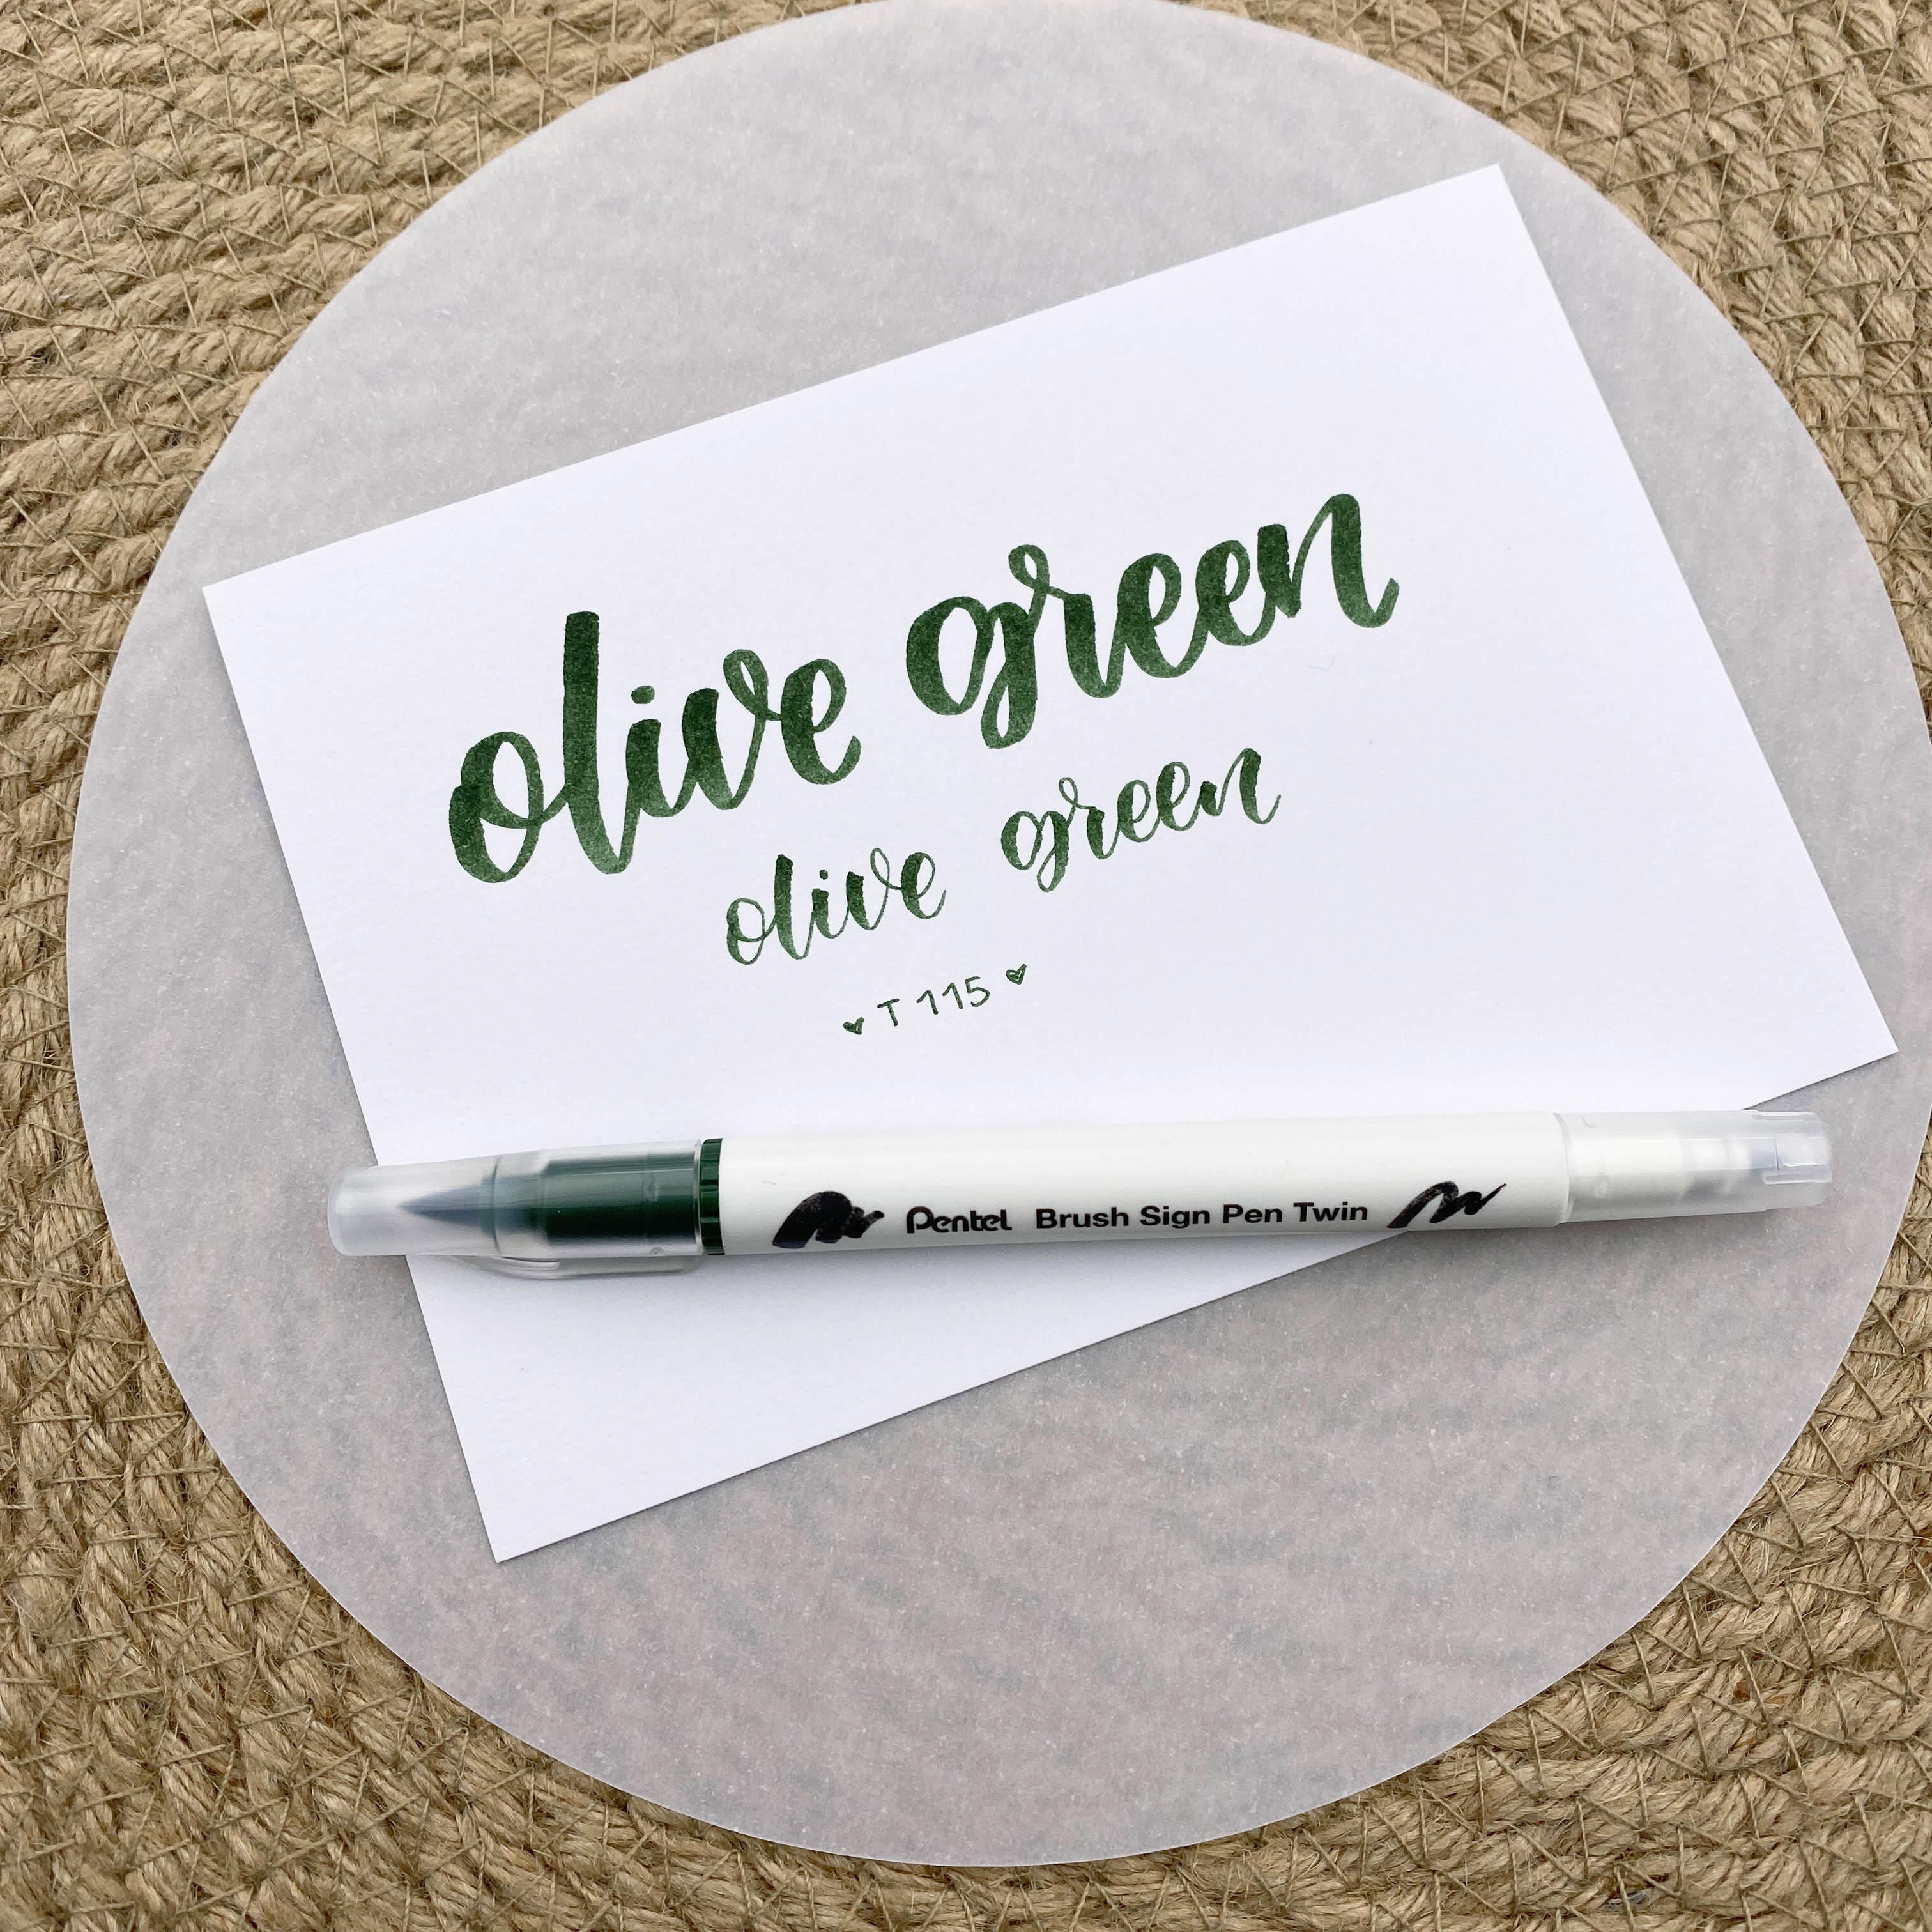 Pentel Brush Sign Pen Twin 115 Olive Green